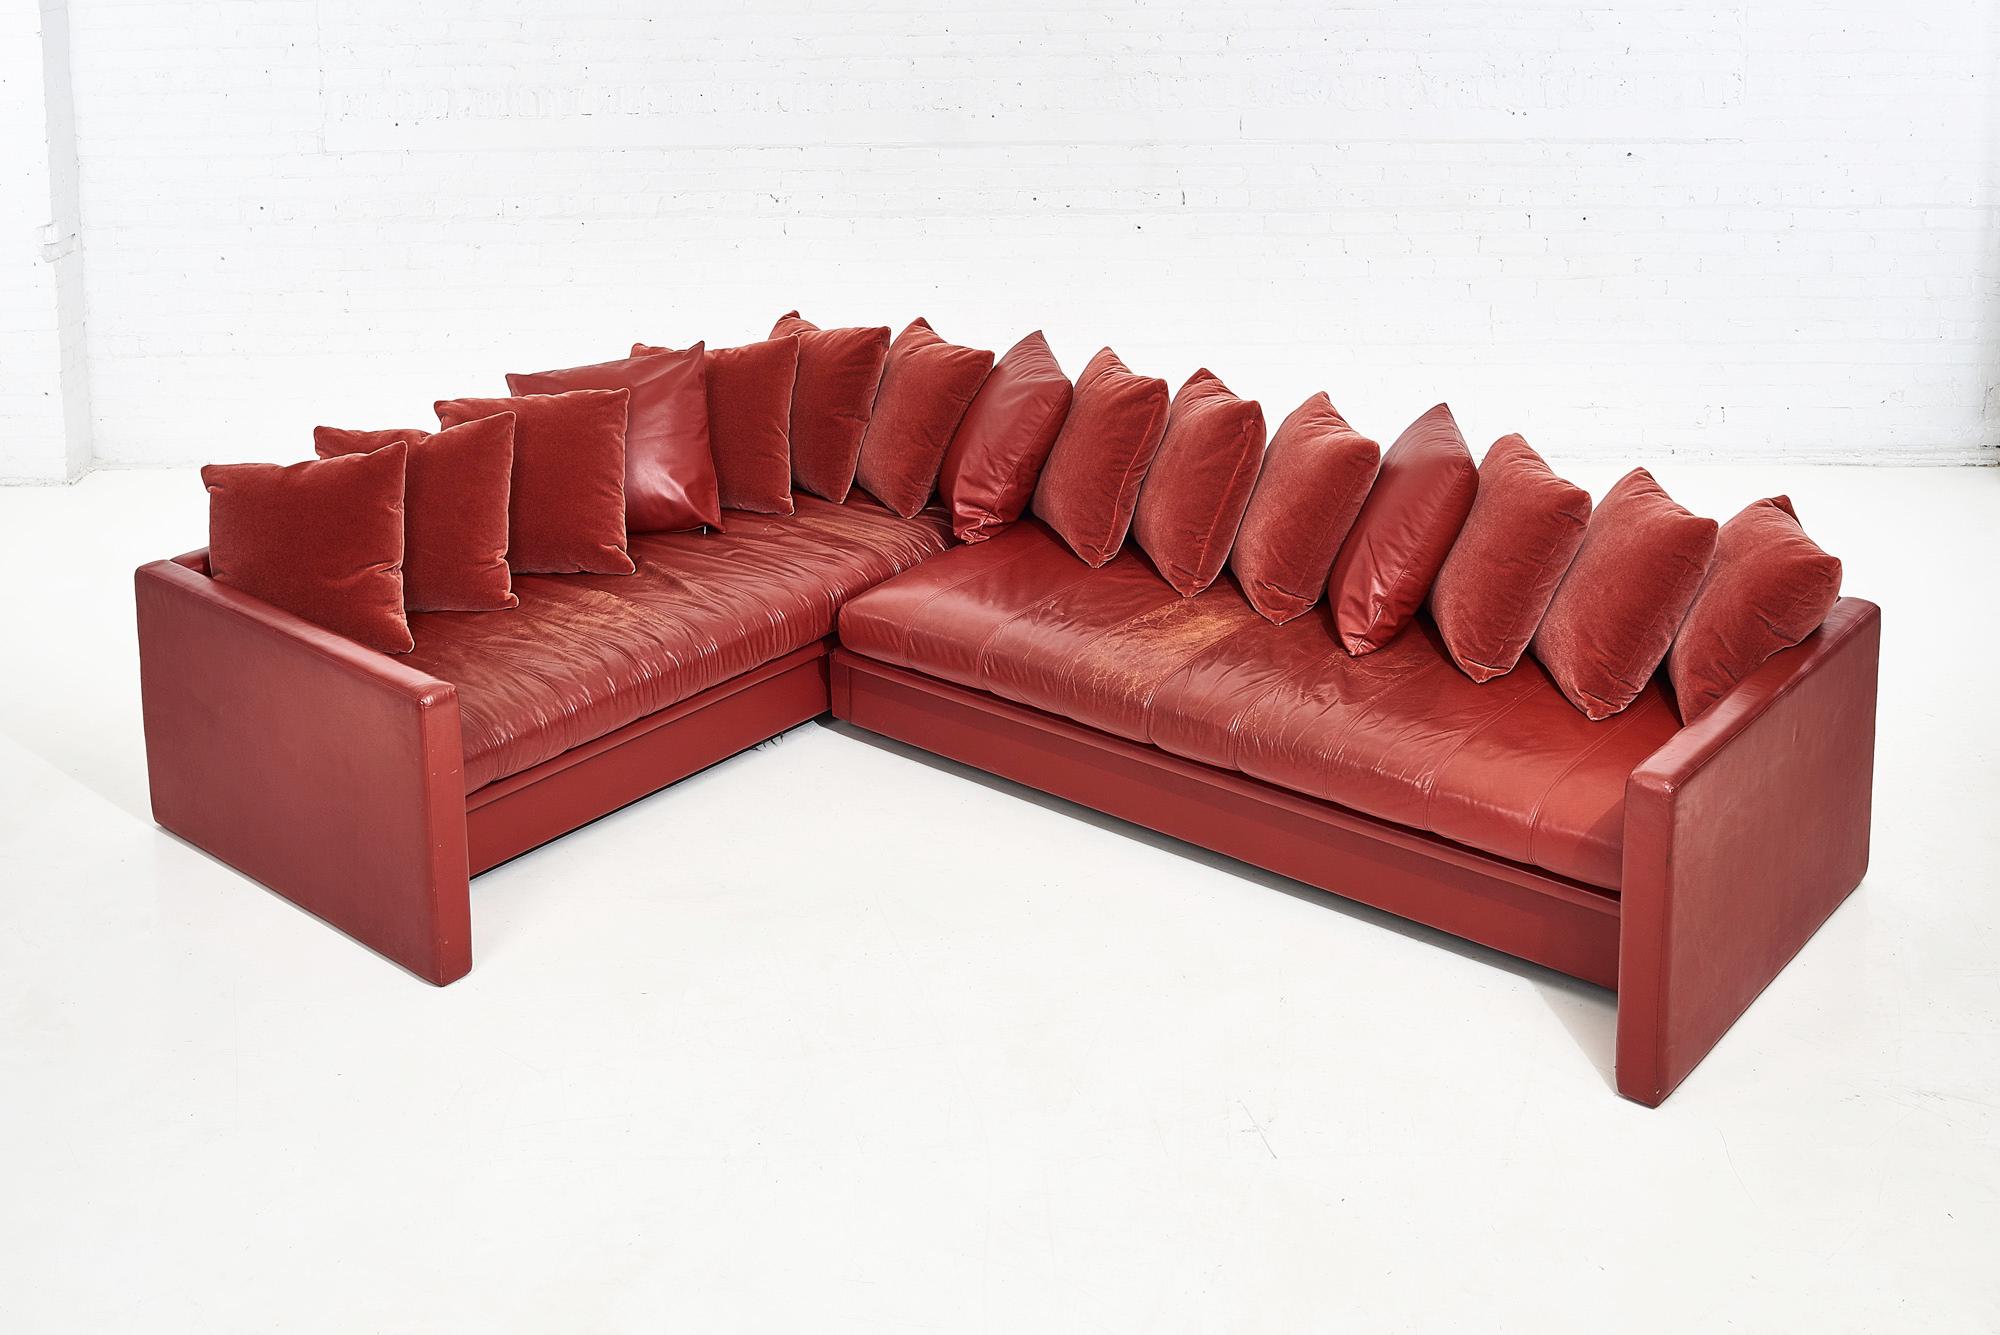 Post-Modern Joseph D'Urso Leather Sectional Sofa, Knoll, 1980 For Sale